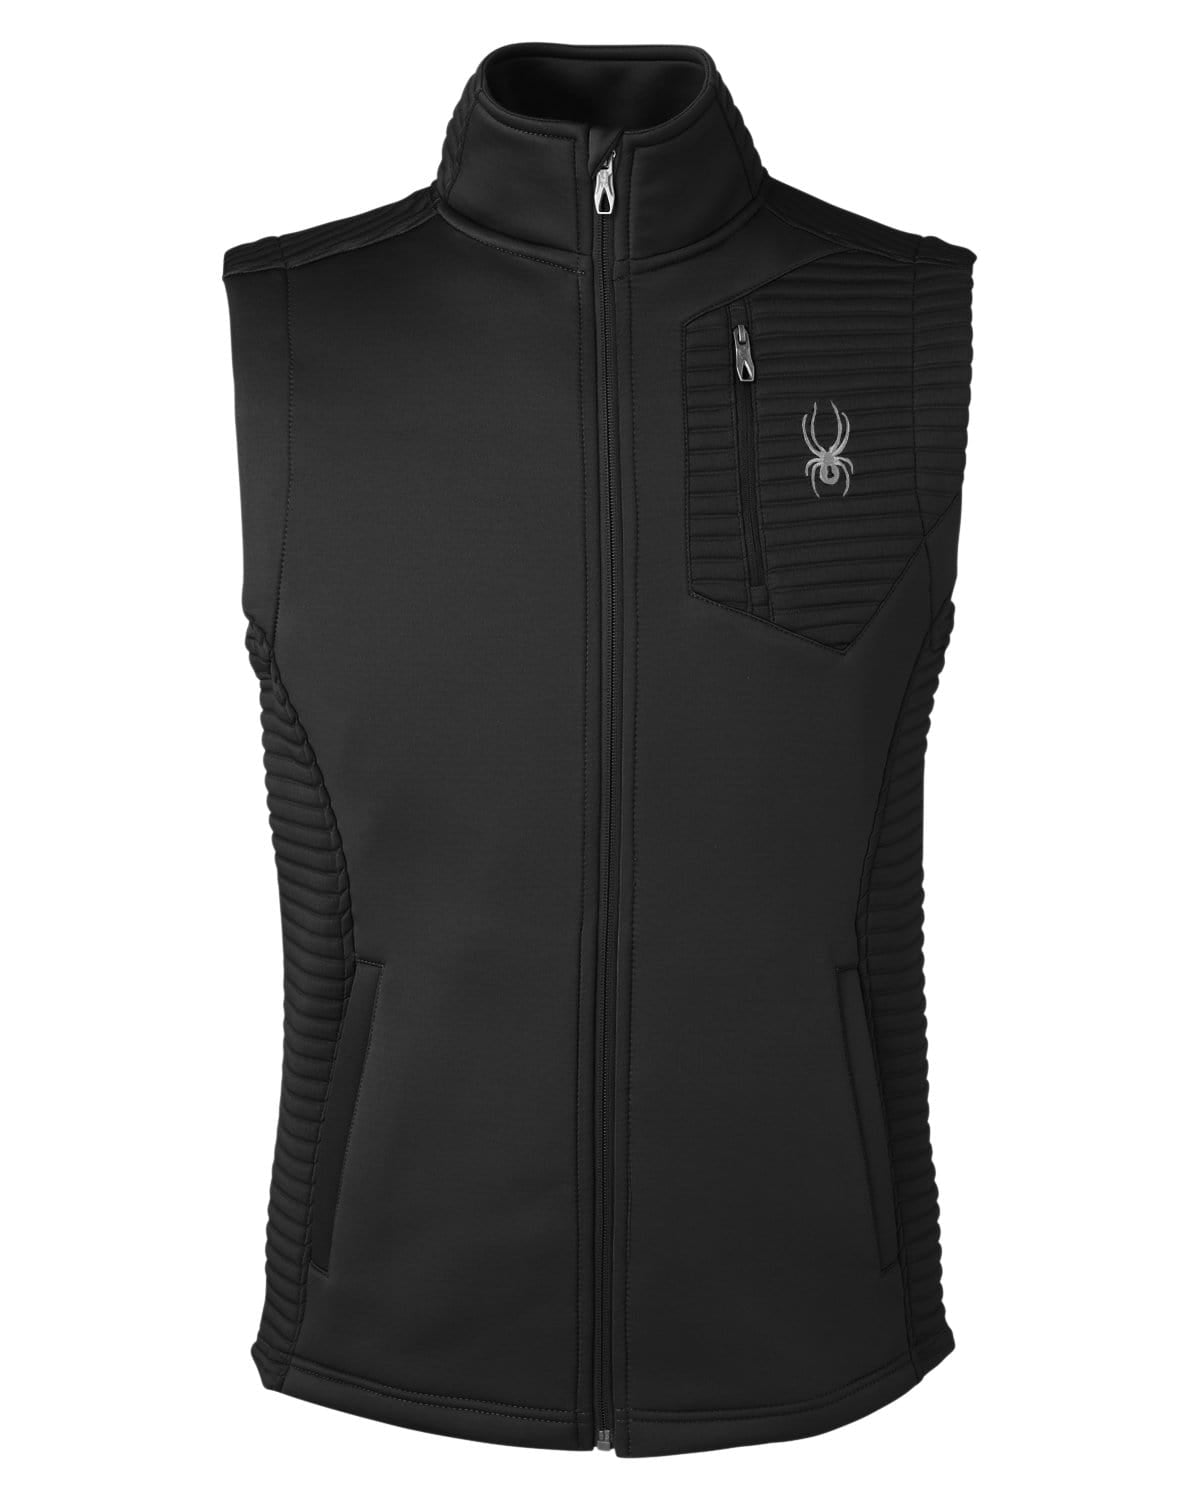 Spyder Outerwear S / Black Spyder - Men's Venom Vest